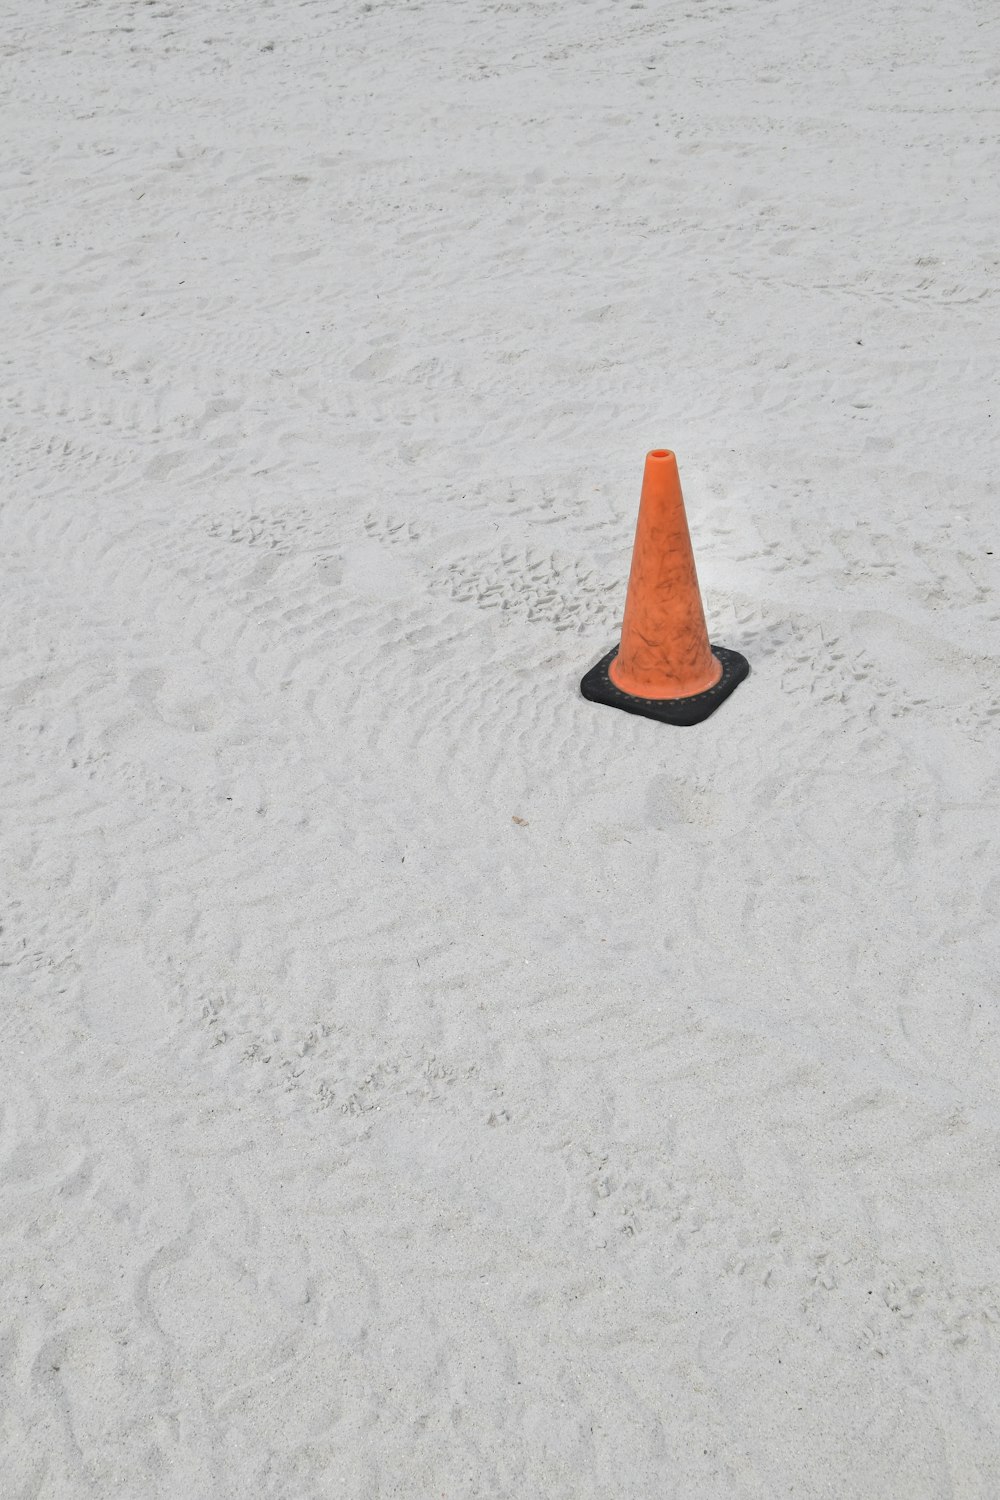 an orange cone sitting on top of a sandy beach